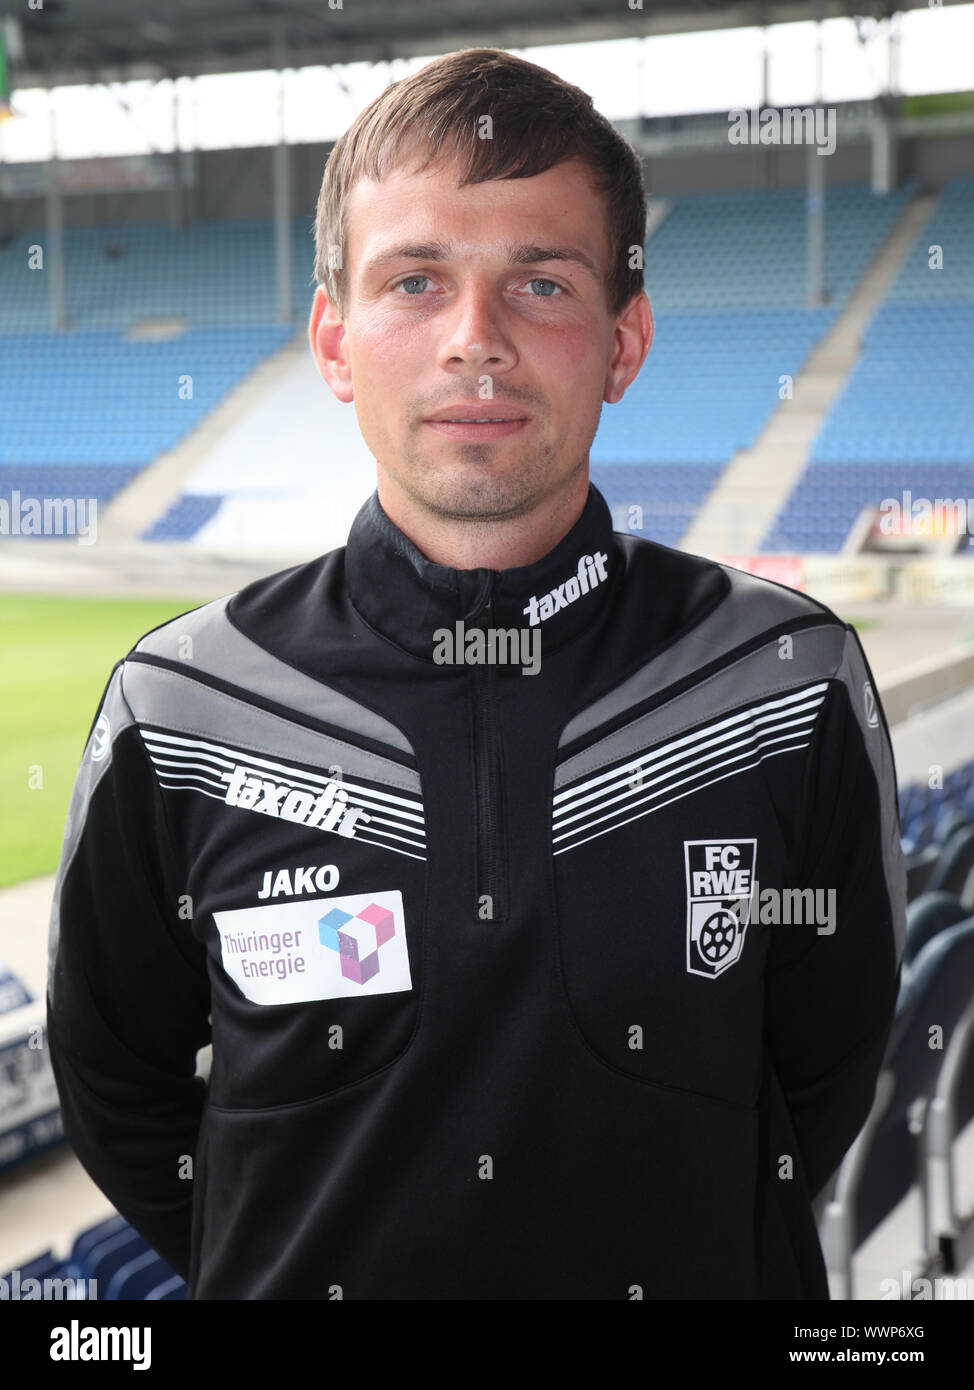 Deutscher Fußball-Cheftrainer Preußer cristiana DFB 3.Liga-Saison 2015/16 FC Rot-Weiss Erfurt Foto Stock